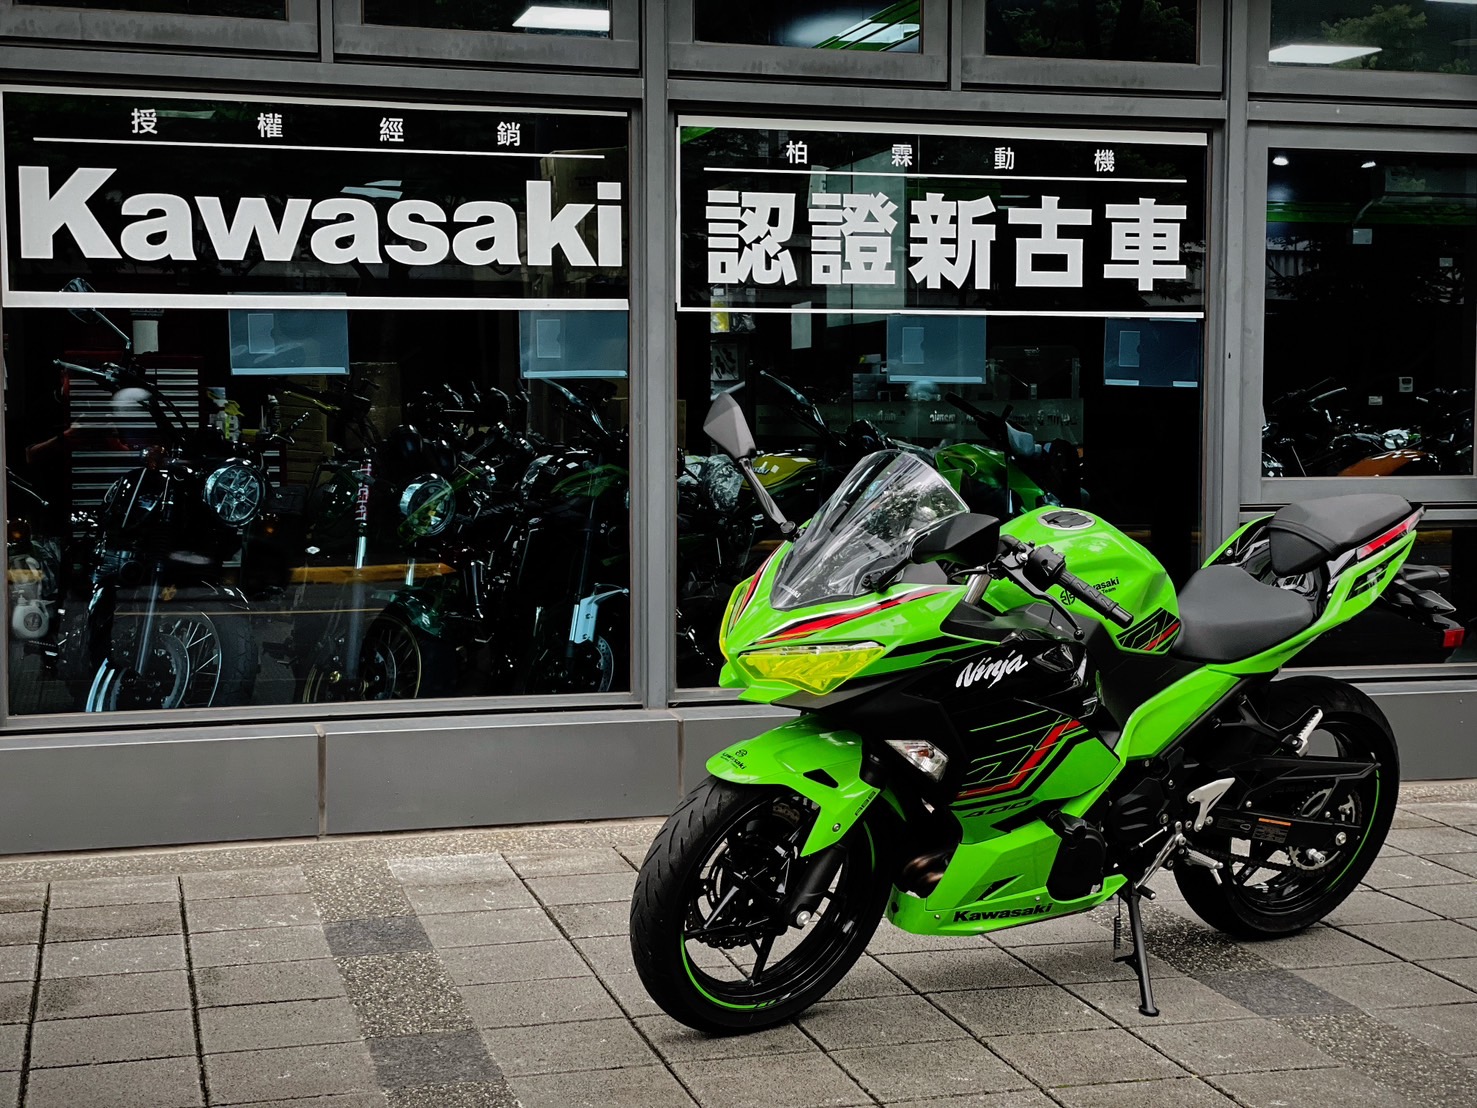 KAWASAKI NINJA400 - 中古/二手車出售中 Kawasaki 認證新古車Ninja400 ABS 基礎改裝 可全額貸款  | 柏霖動機Kawasak職人-阿弘